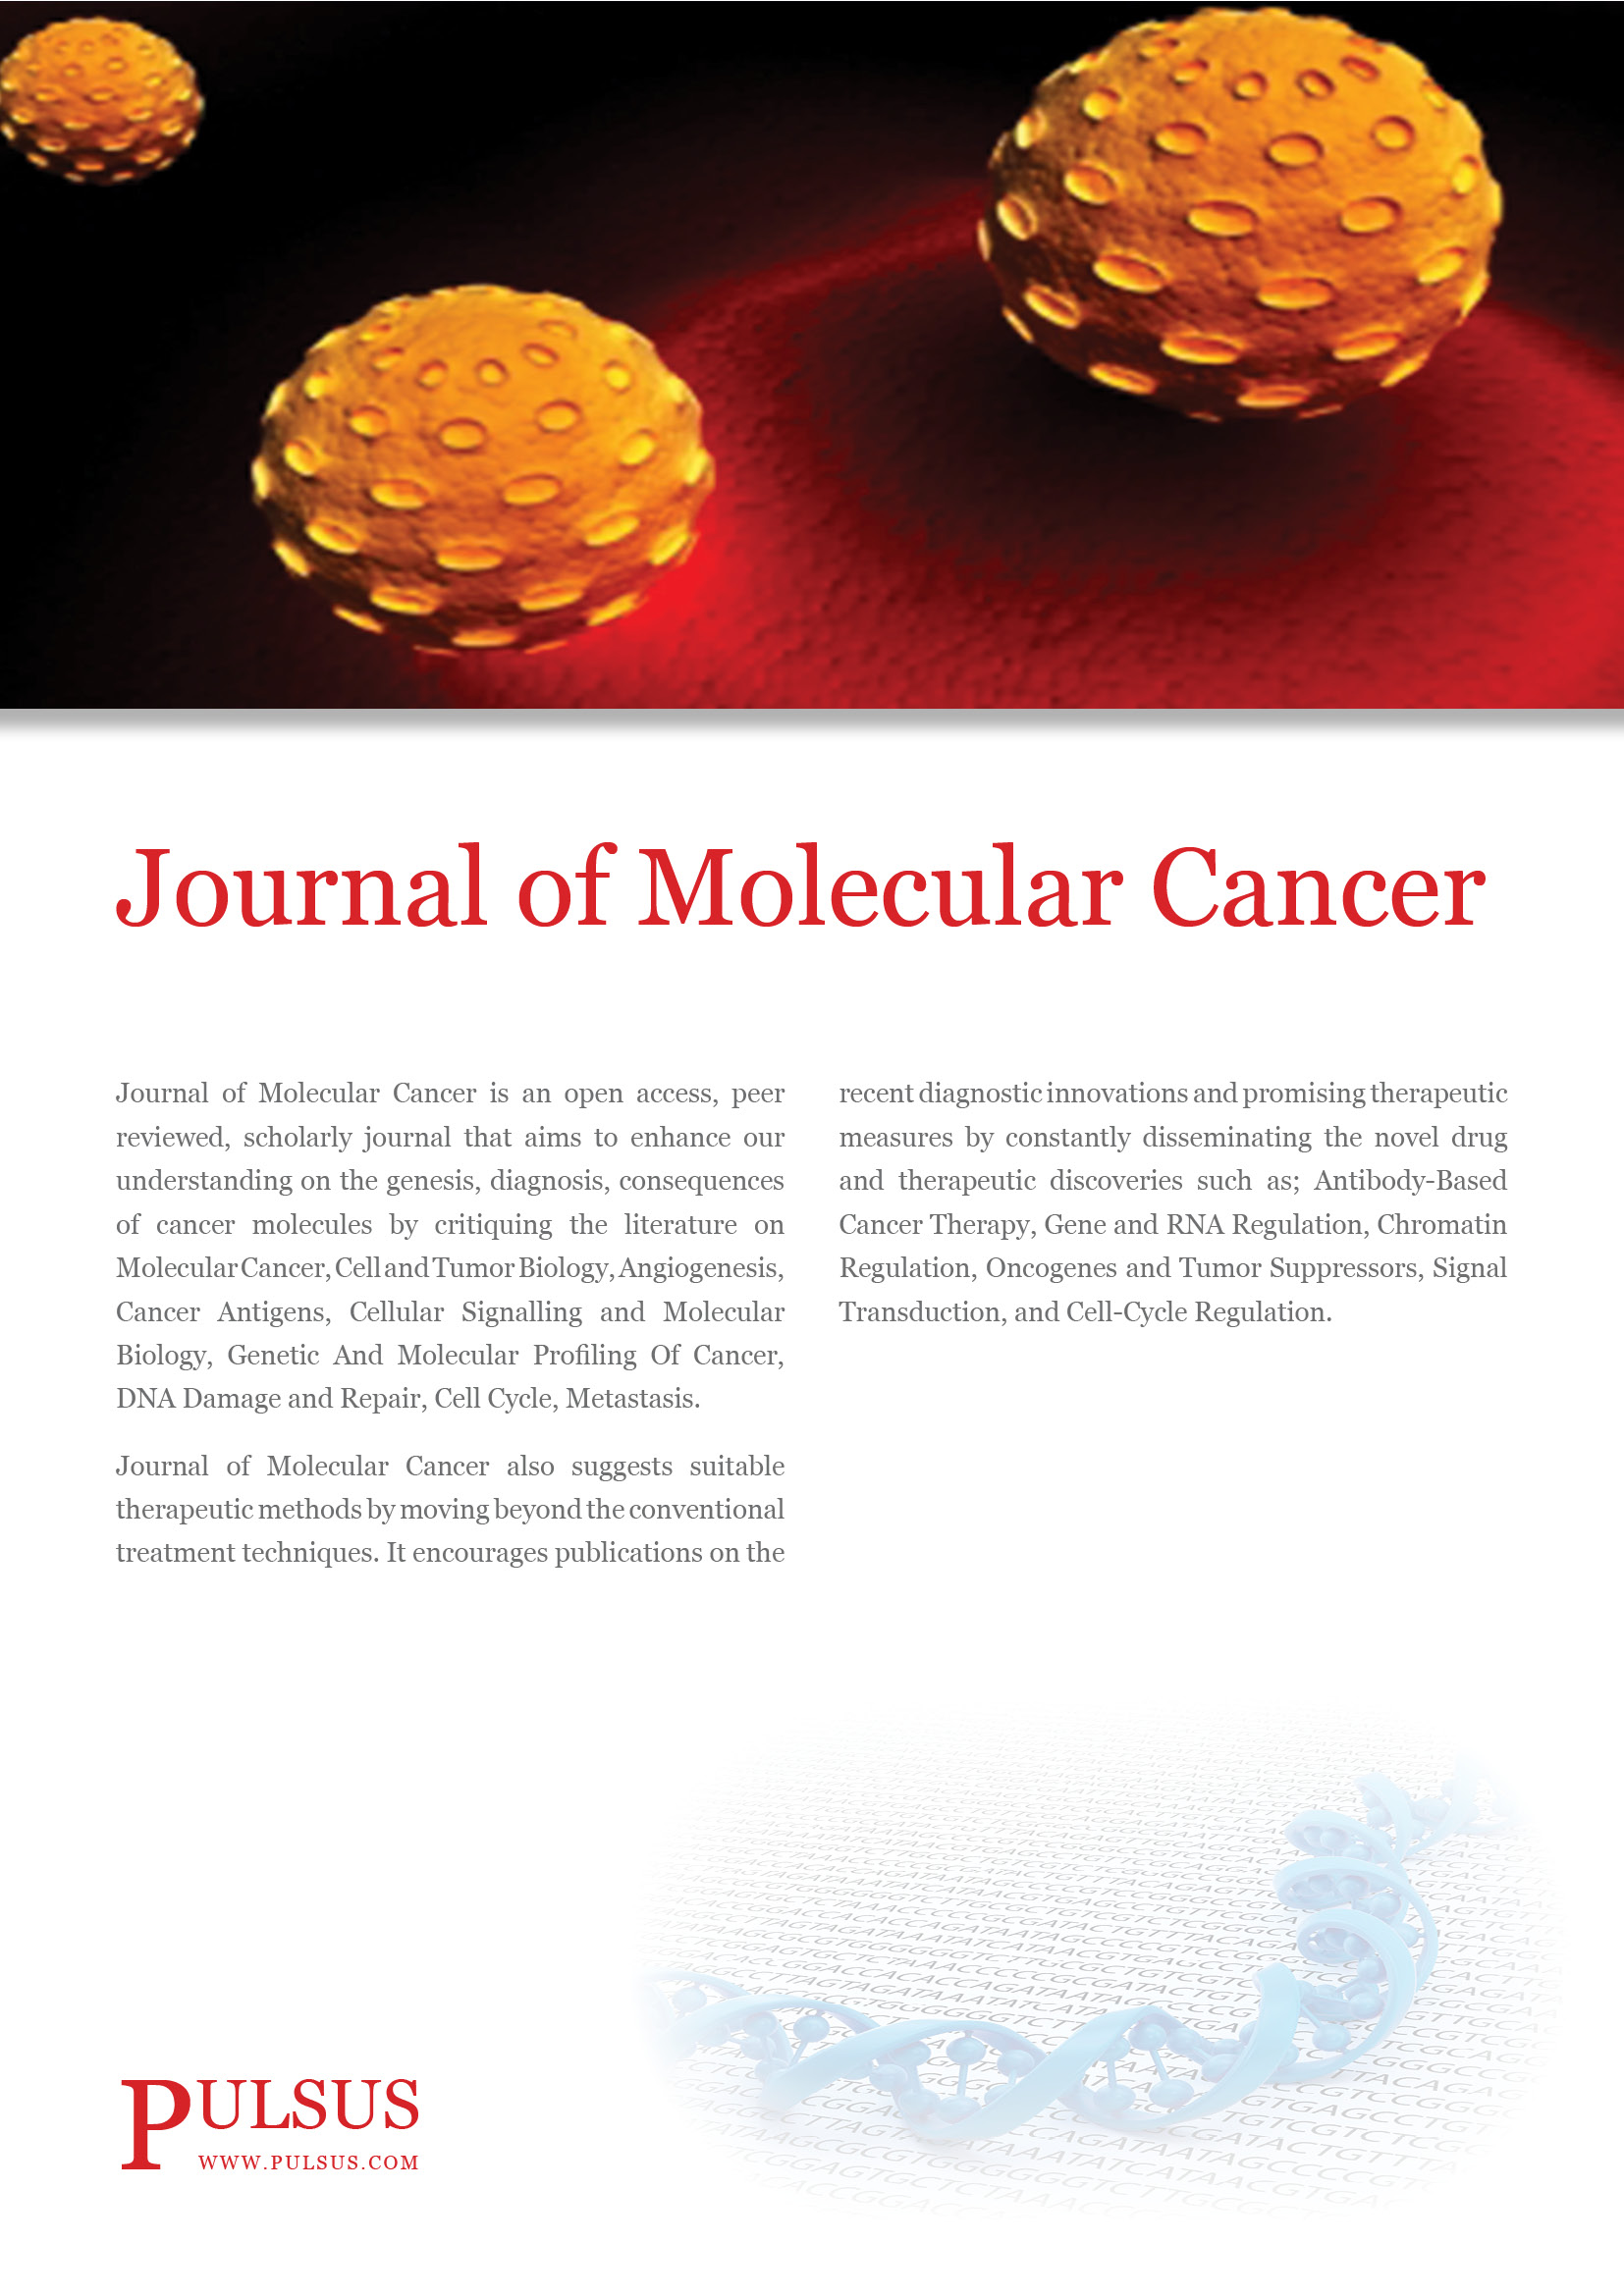 Журнал молекулярного рака